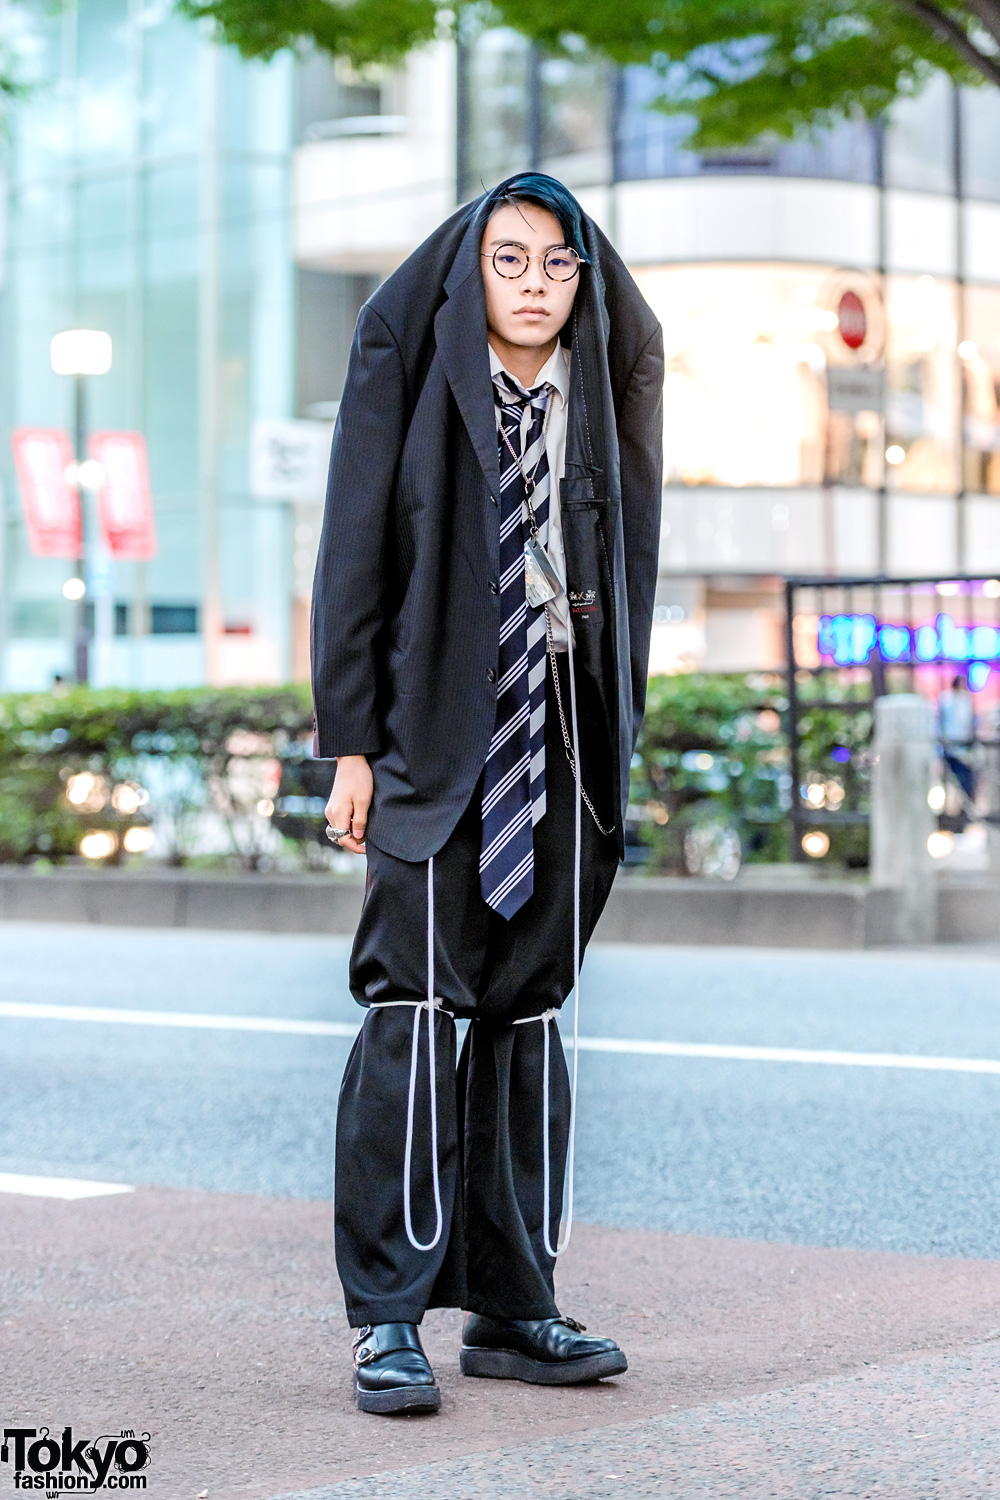 Statement Japanese Menswear Suit Street Style w/ Blazer Worn Over Head, Double Neckties, Yohji Yamamoto & Foot The Coacher